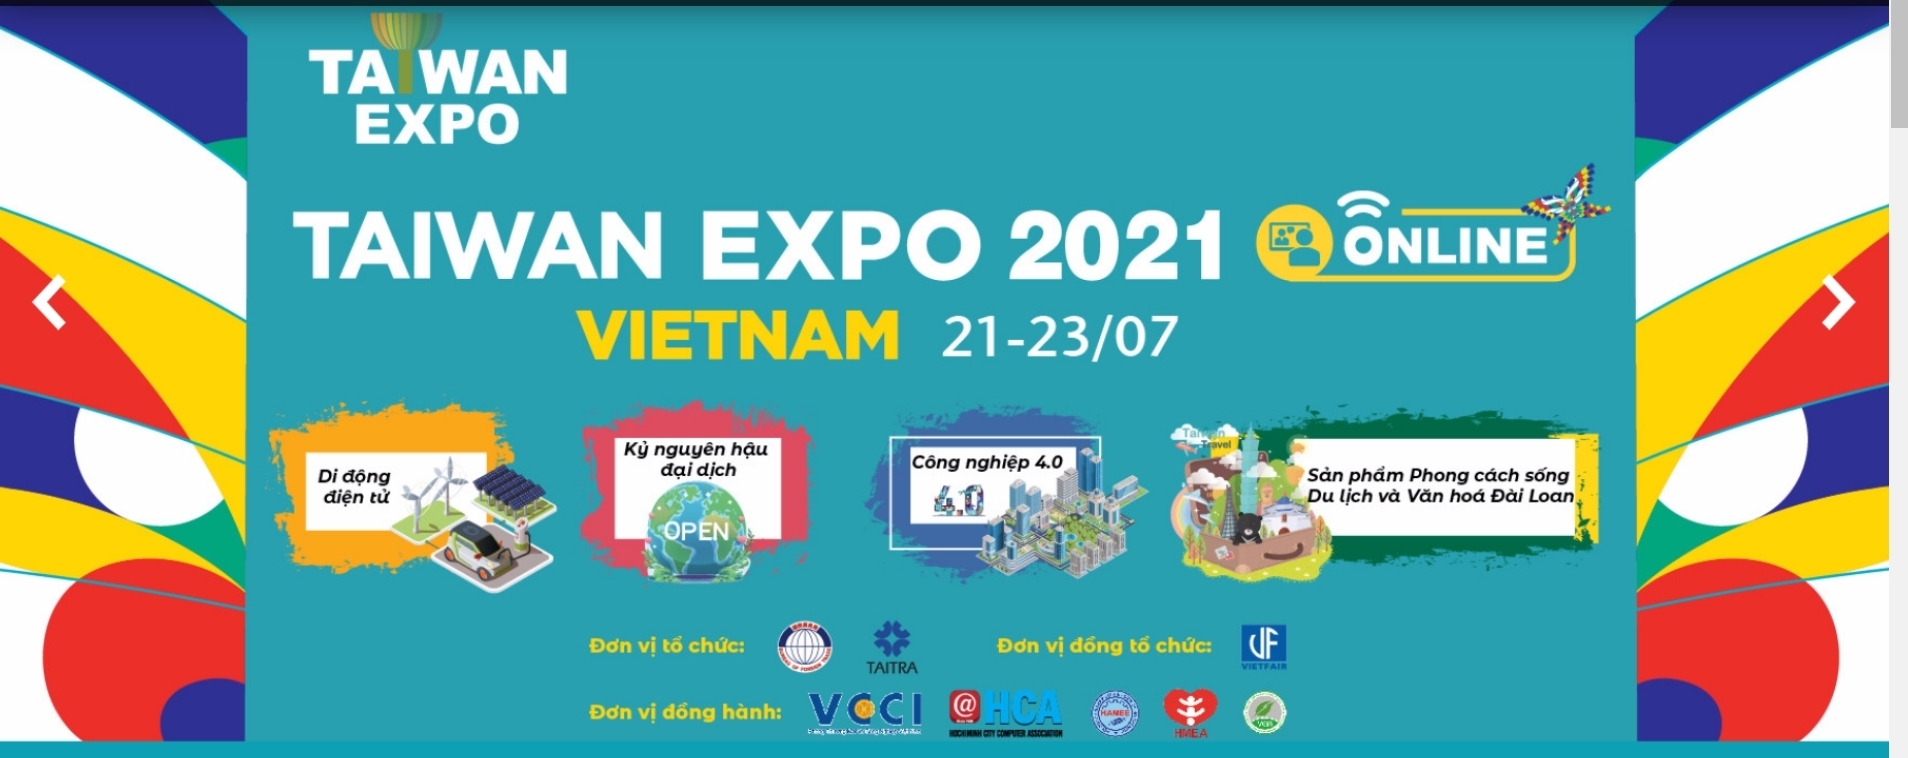 2021 Taiwan Expo in Vietnam (VR Exhibition)